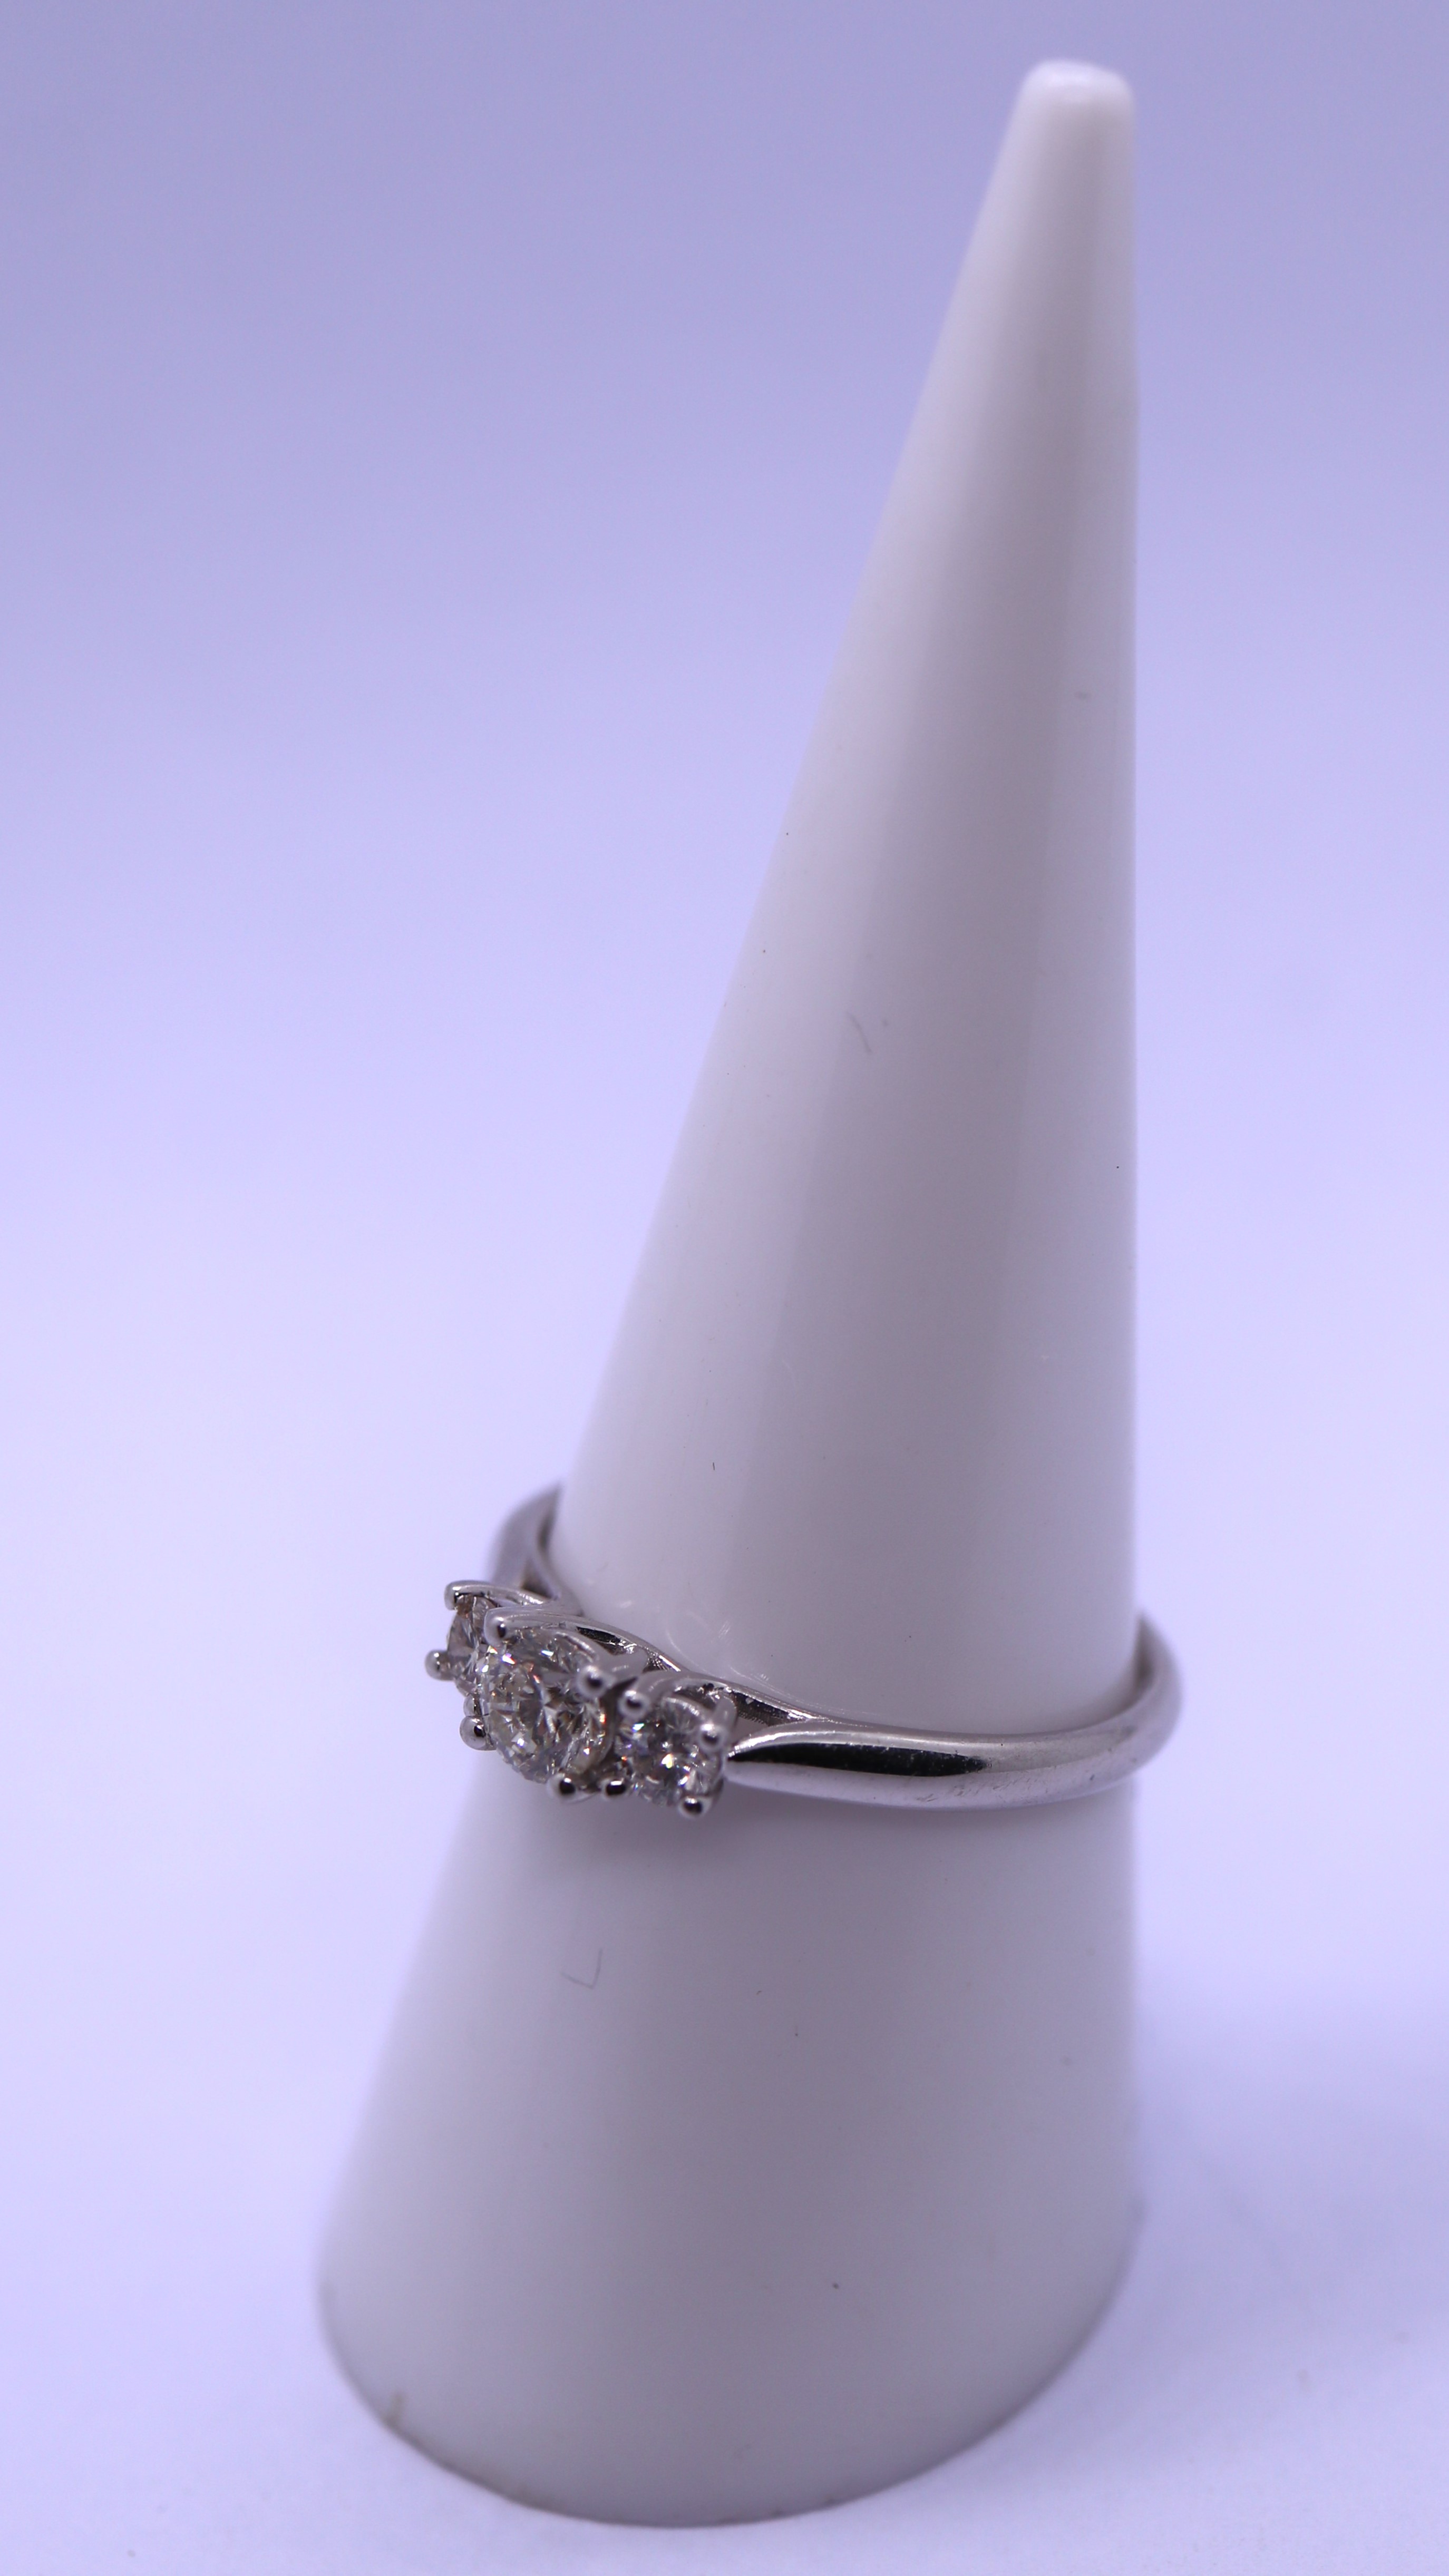 9ct white gold 3 stone diamond ring - Size O - Image 2 of 2